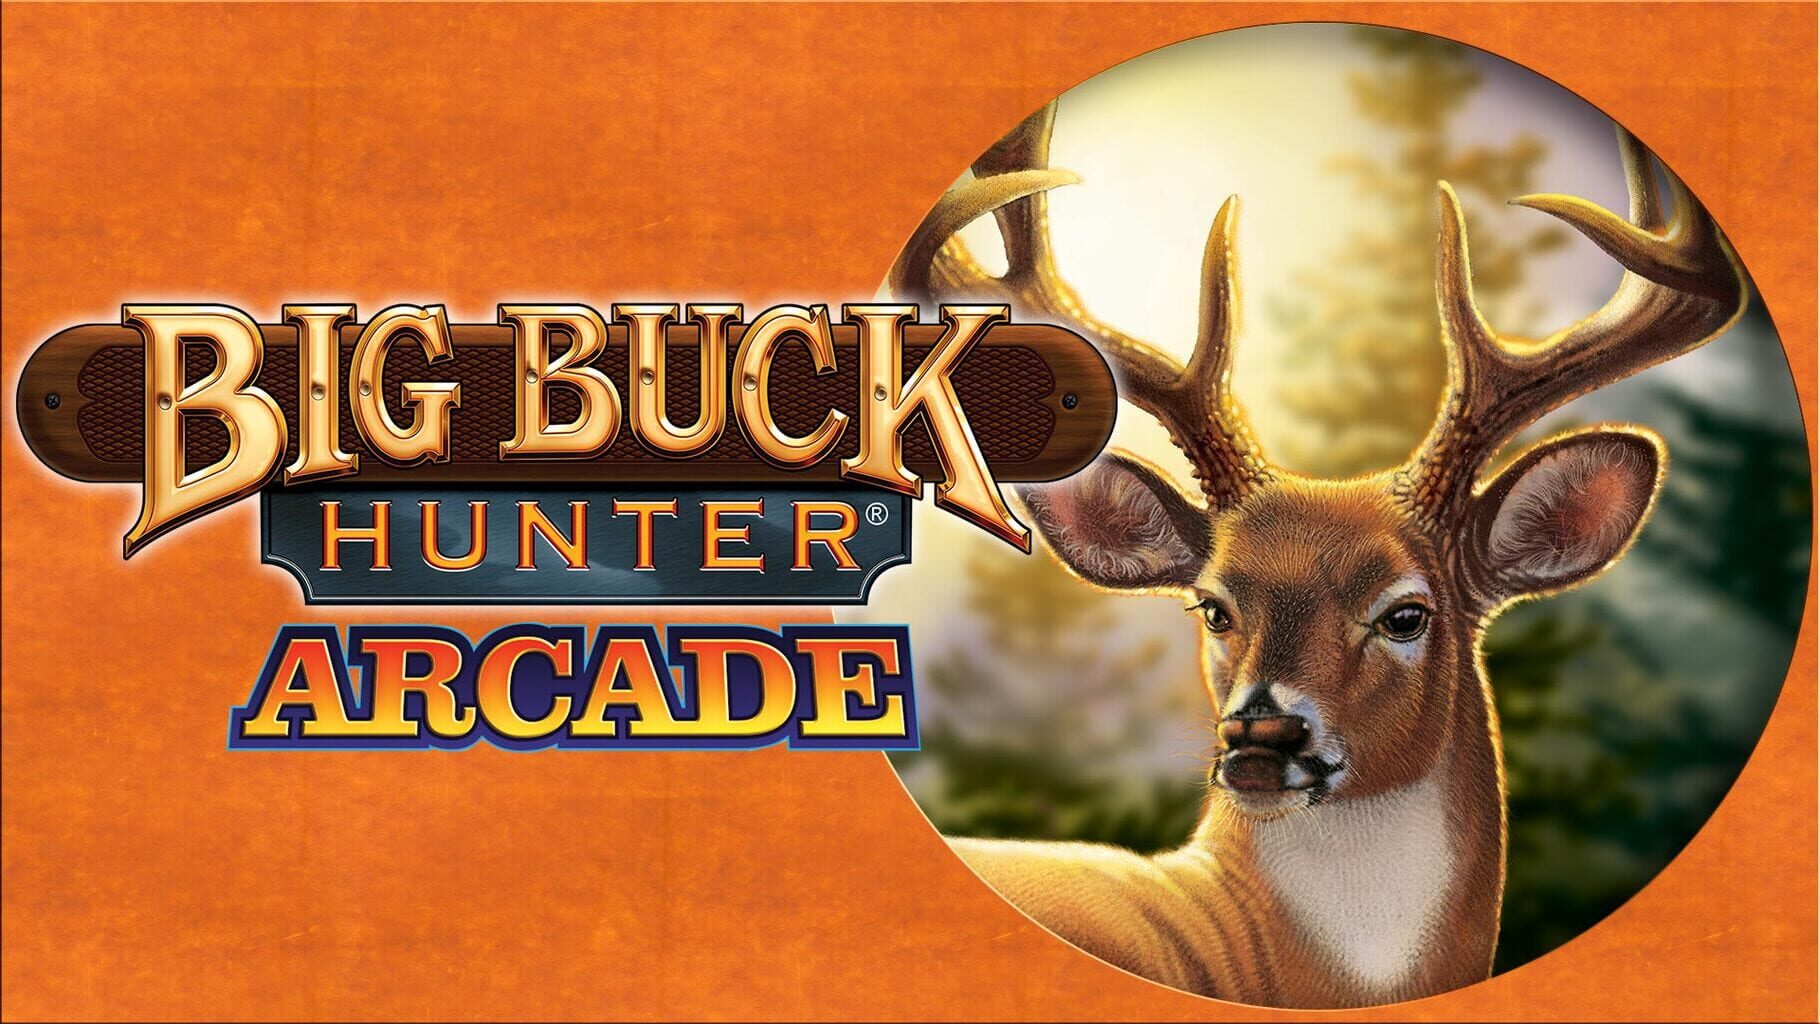 Big Buck Hunter Arcade artwork